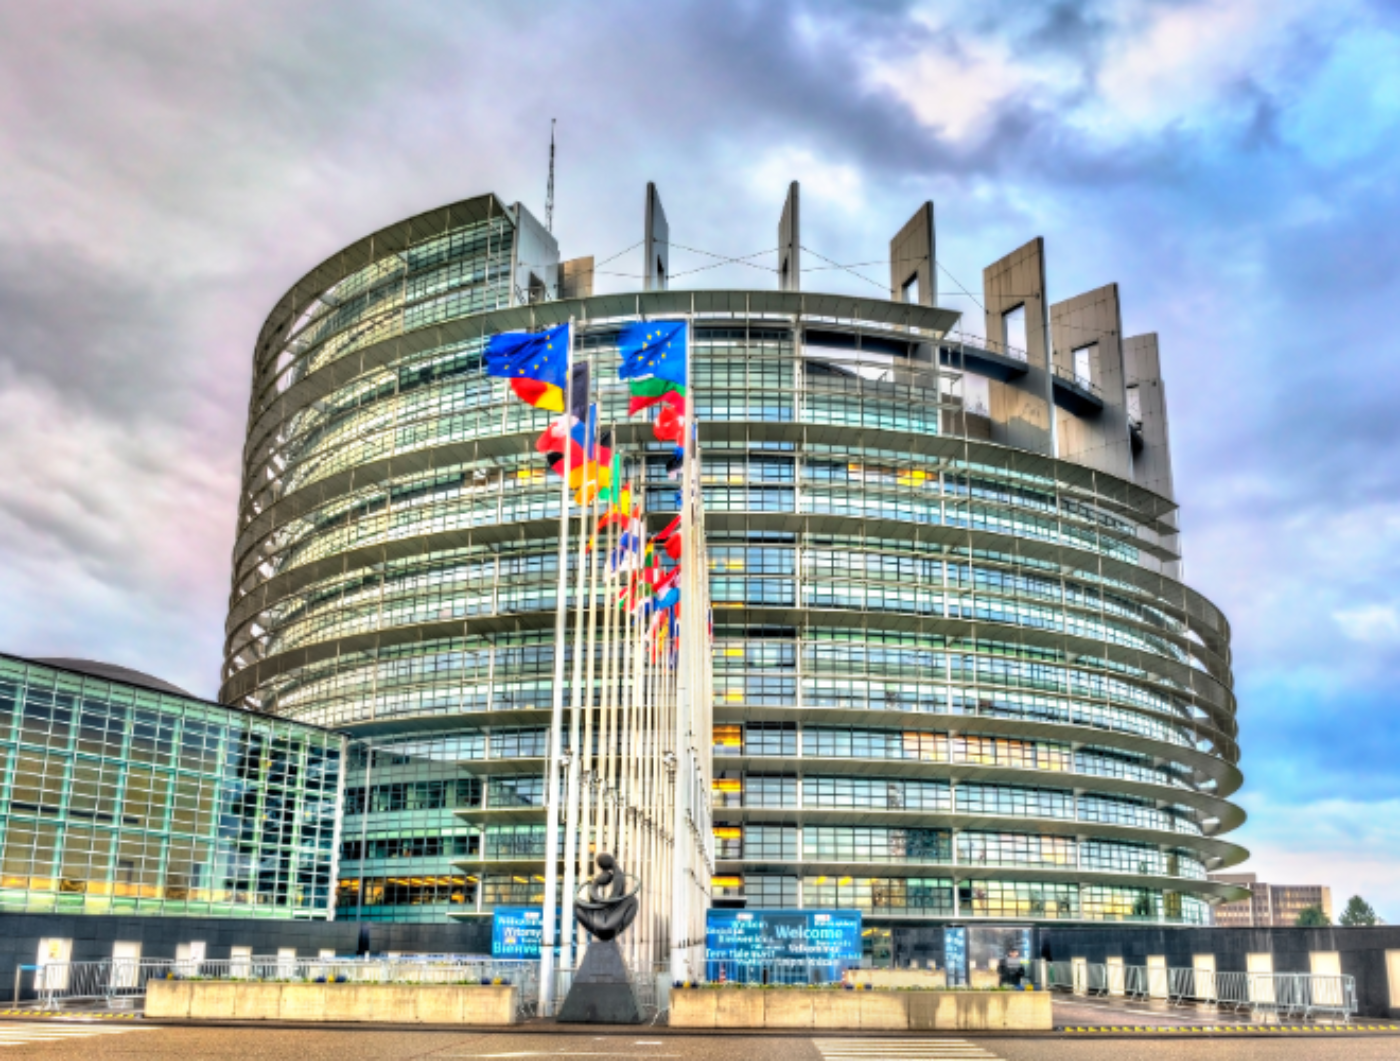 EU Parlament Straßburg mit Fahnen davor.